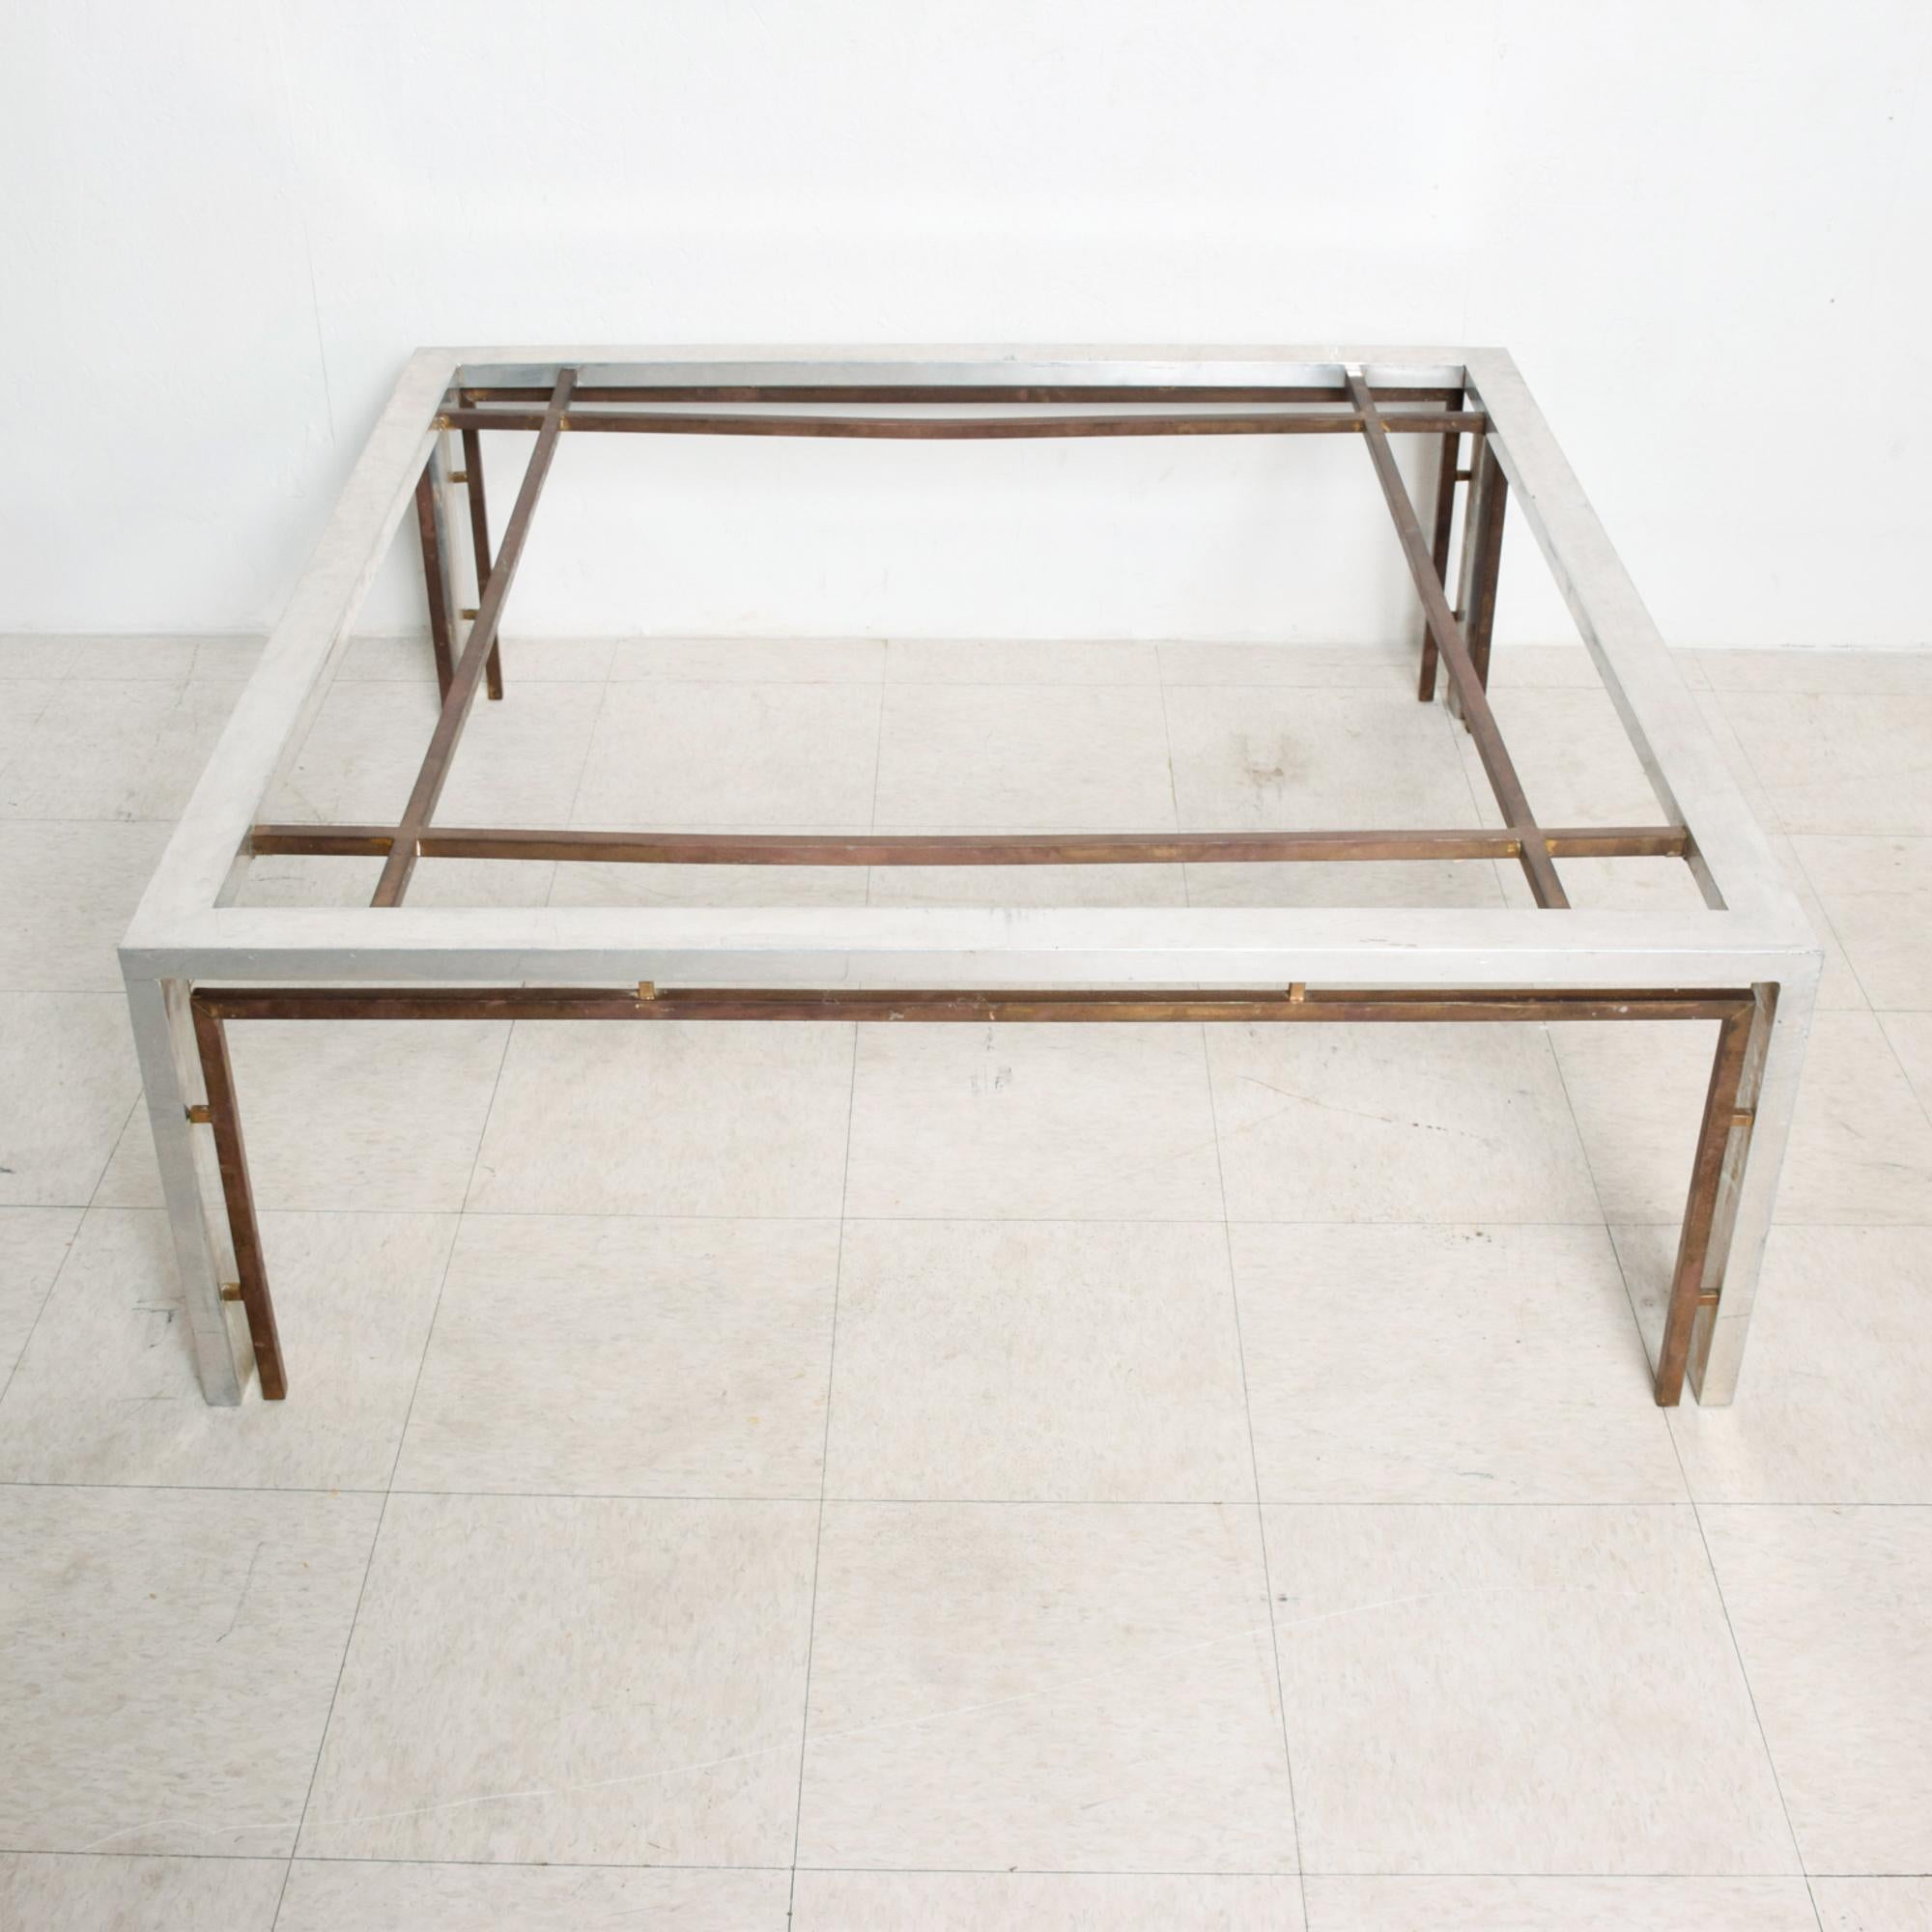 Mexican Modern Square Coffee Table Modular Design Bronze and Aluminum Arturo Pani 1960s